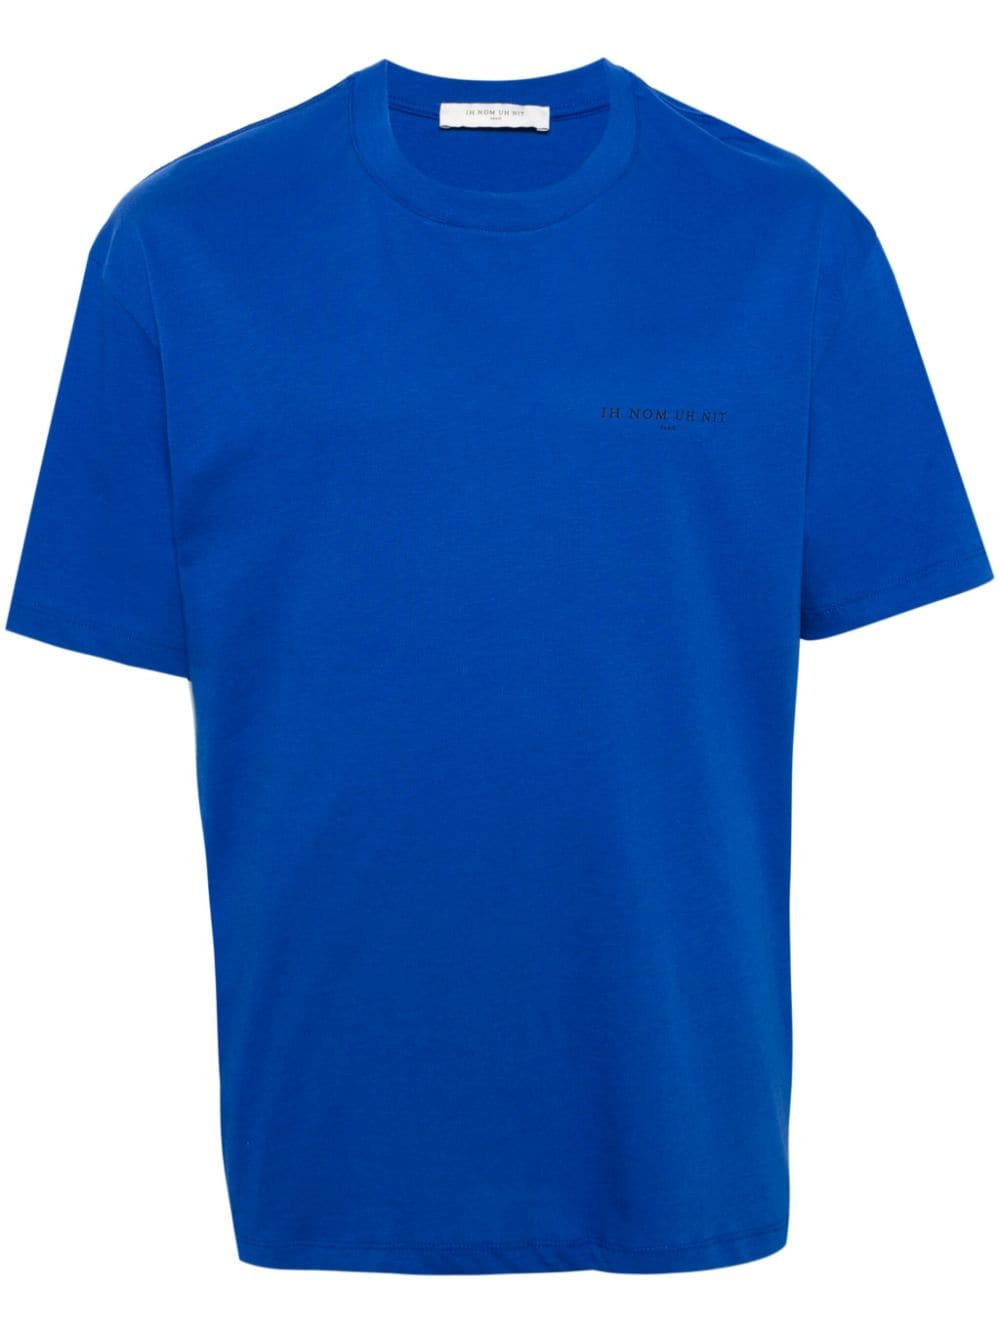 T-shirt bleu roi avec écriture logo